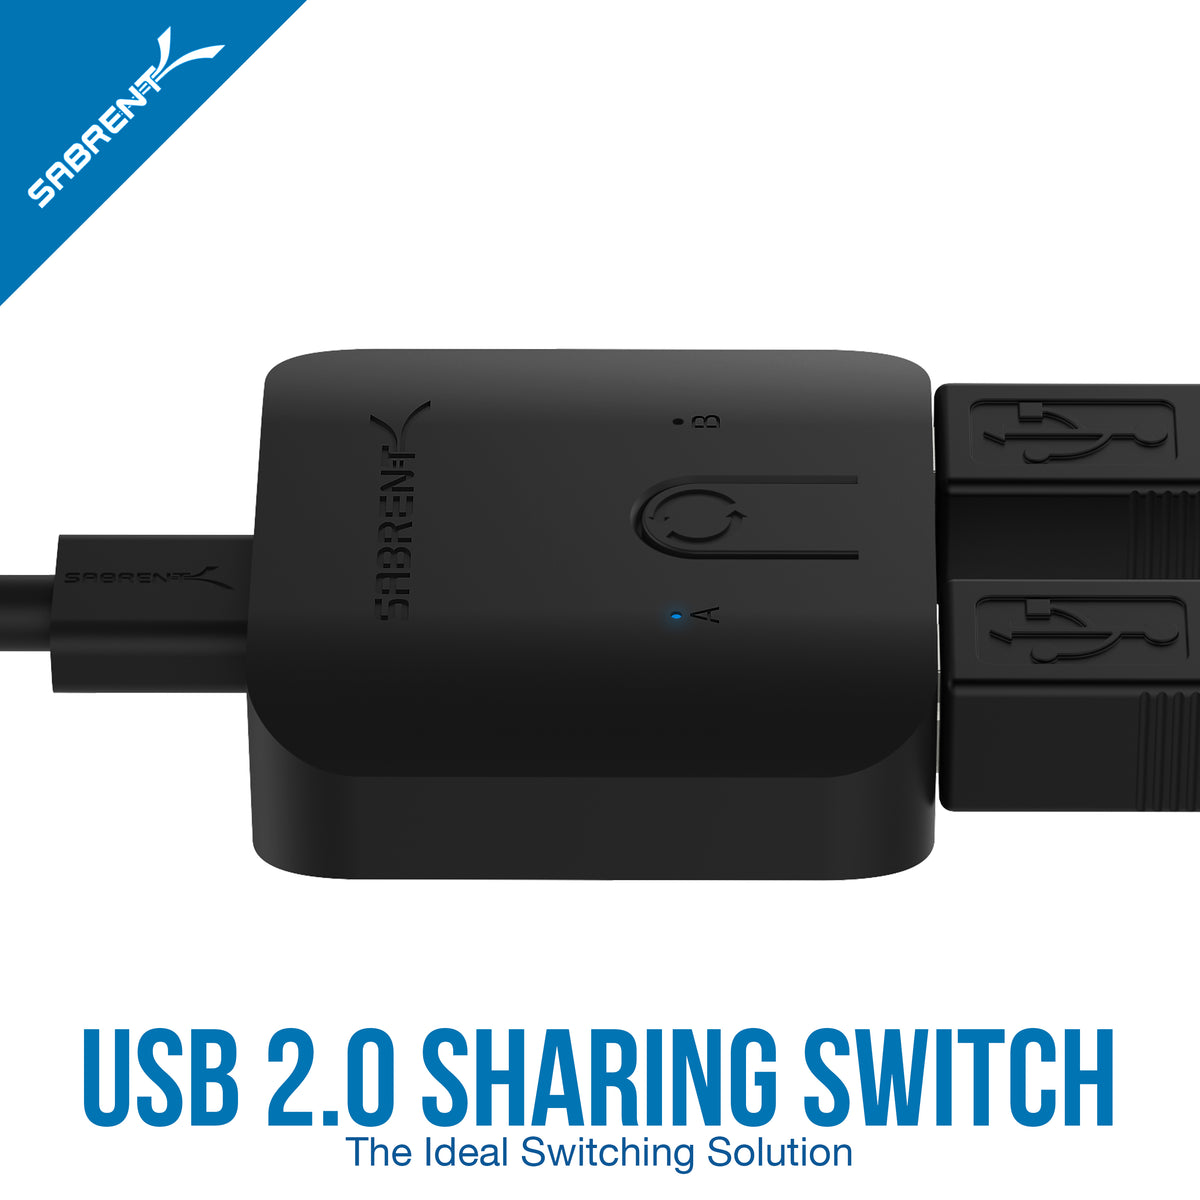 USB 2.0 Sharing Switch